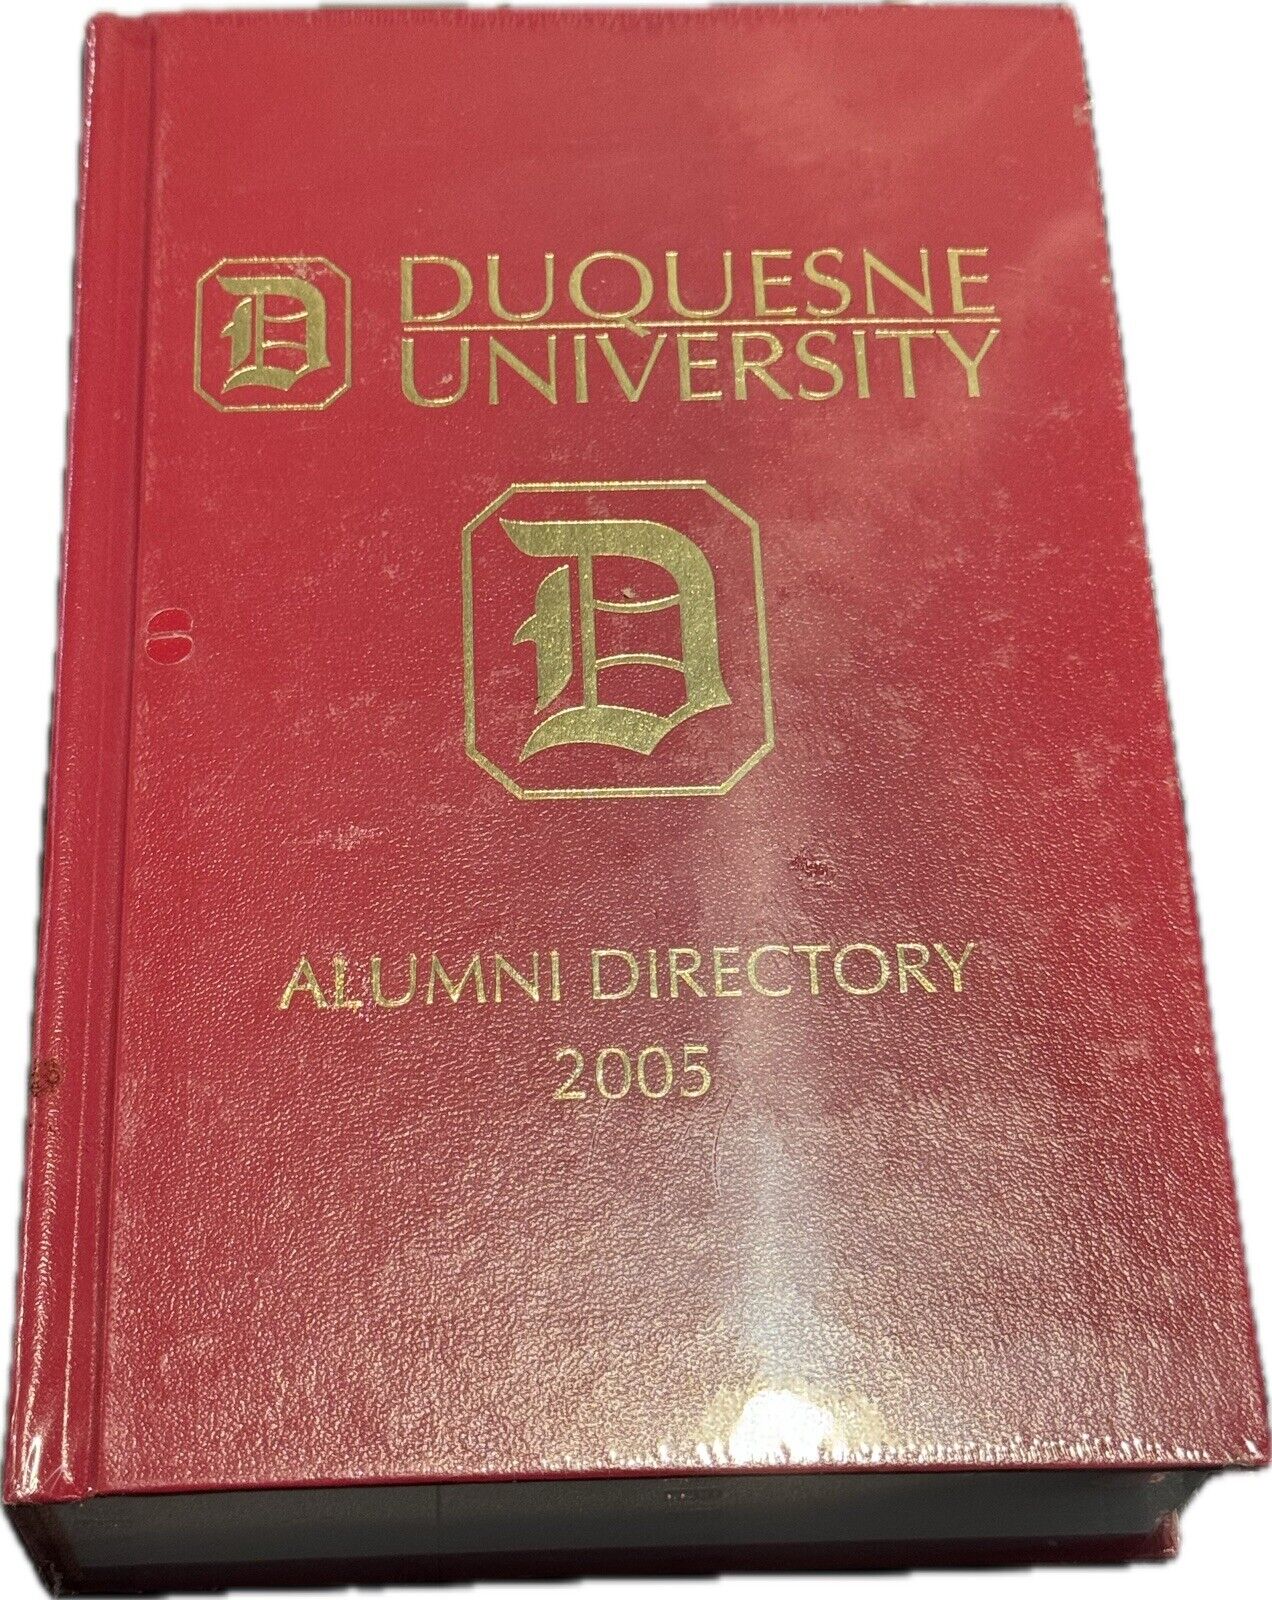 Duquesne University Alumni Directory 2005 Sealed In Plastic Brand New